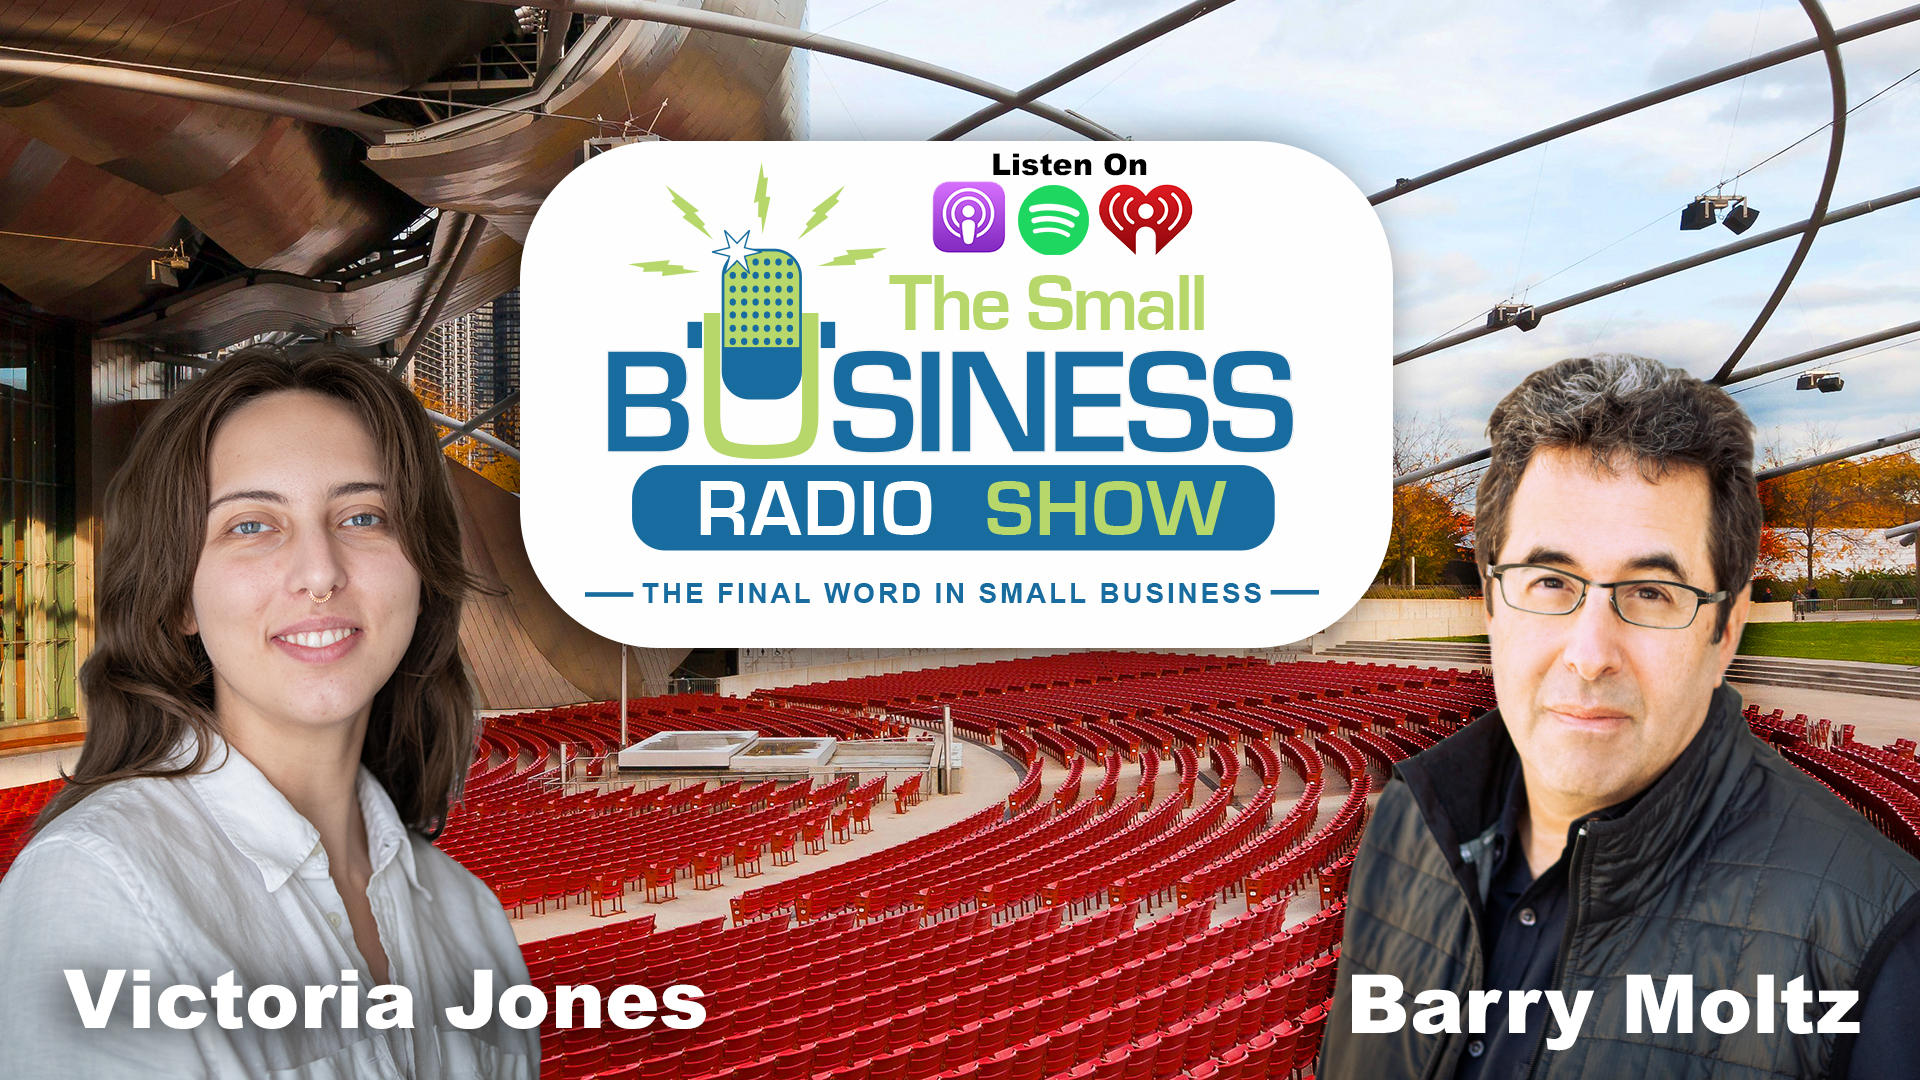 Victoria Jones on The Small Business Radio Show